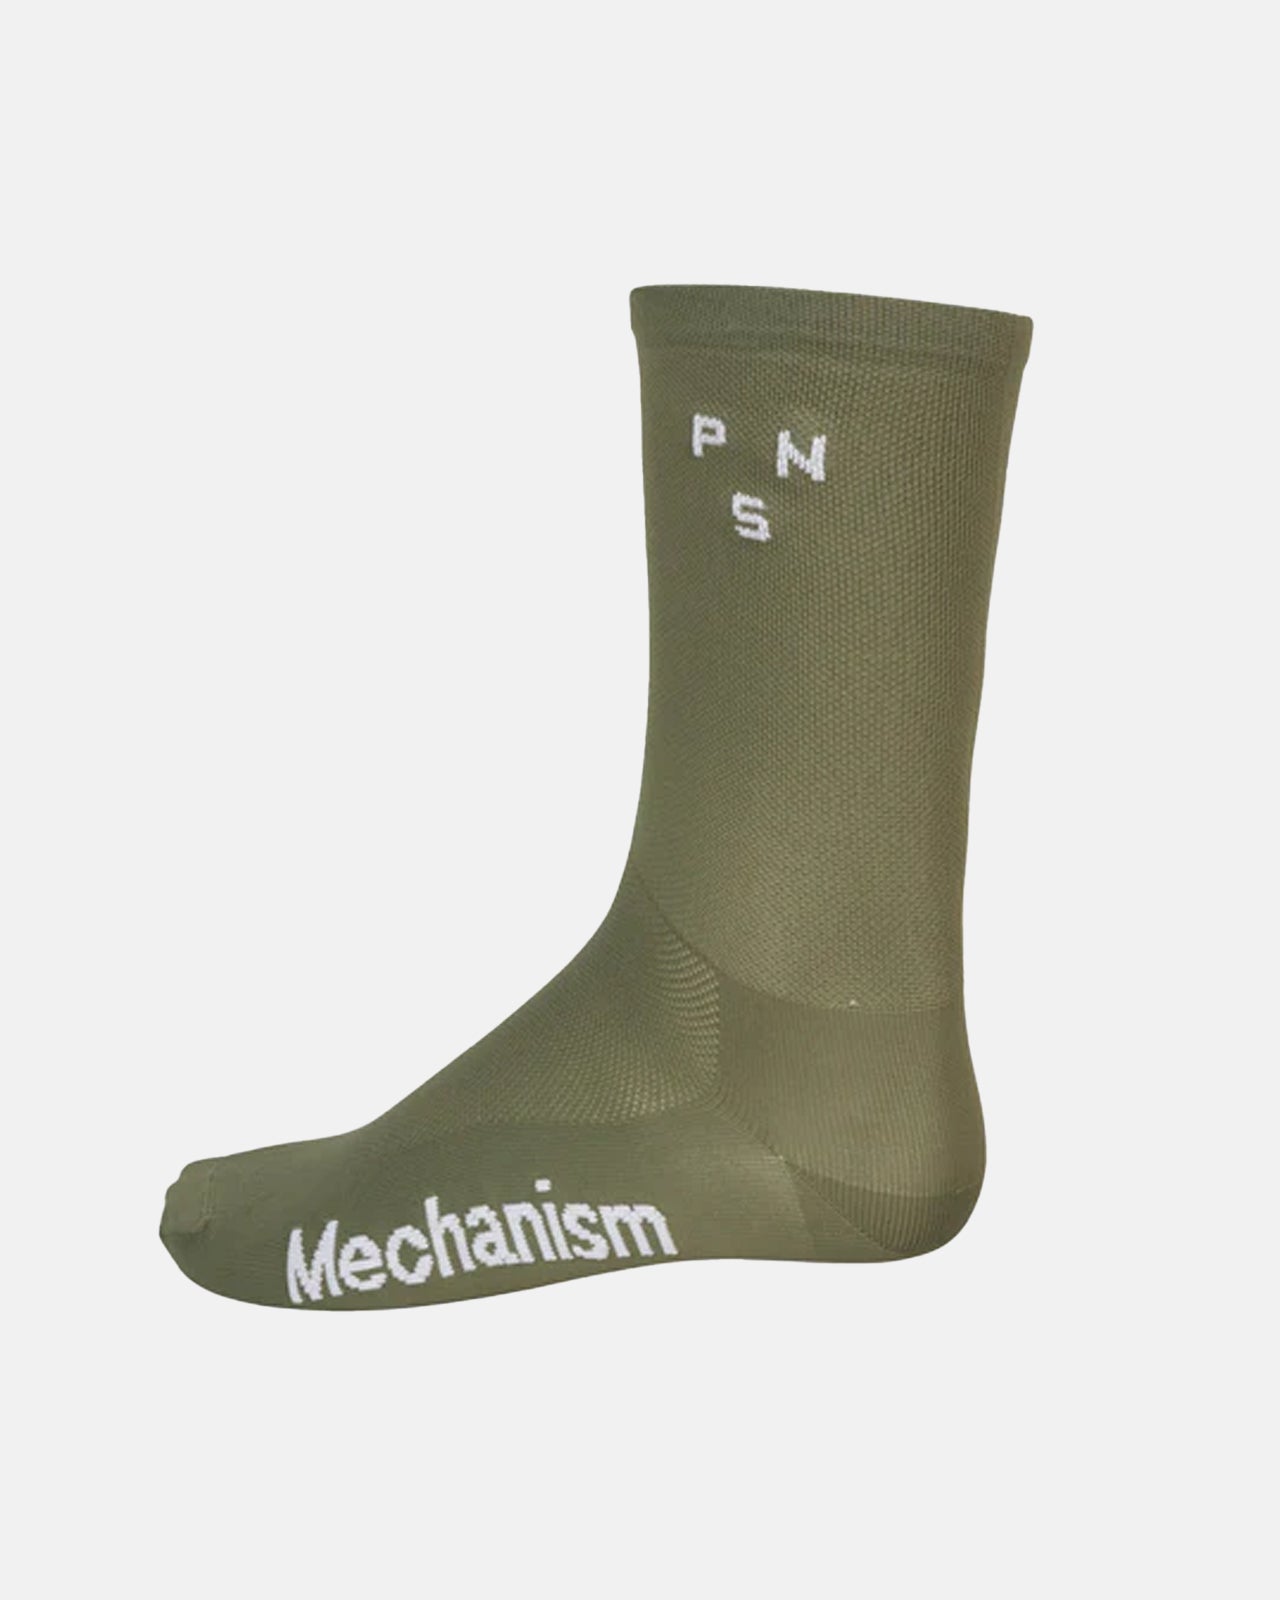 Mechanism Socks - Light Olive - Pas Normal Studios